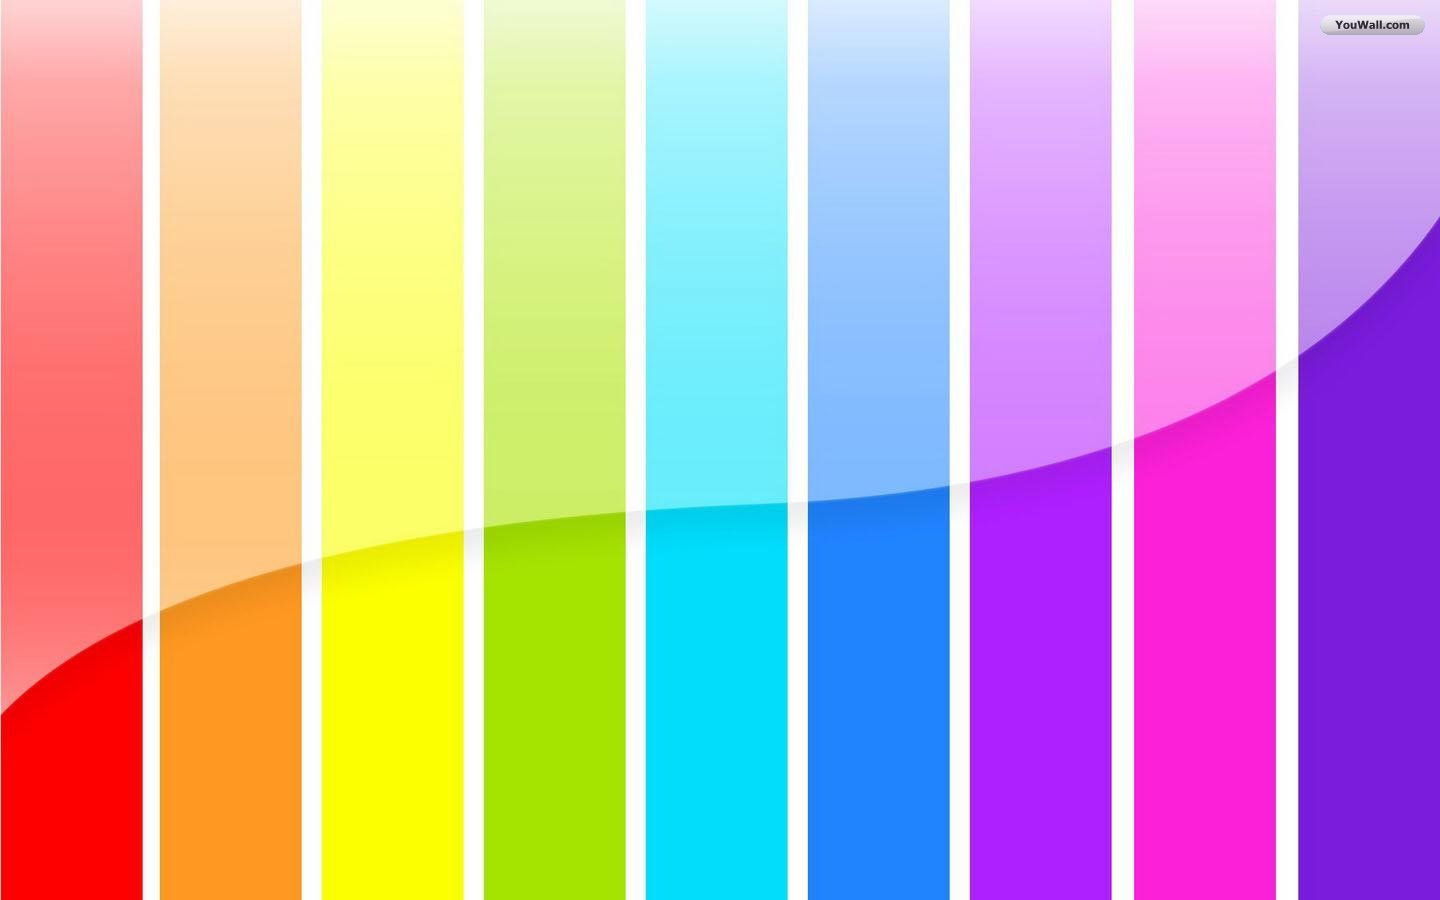 YouWall - Colored Desktop Wallpaper - wallpaper,wallpapers,free